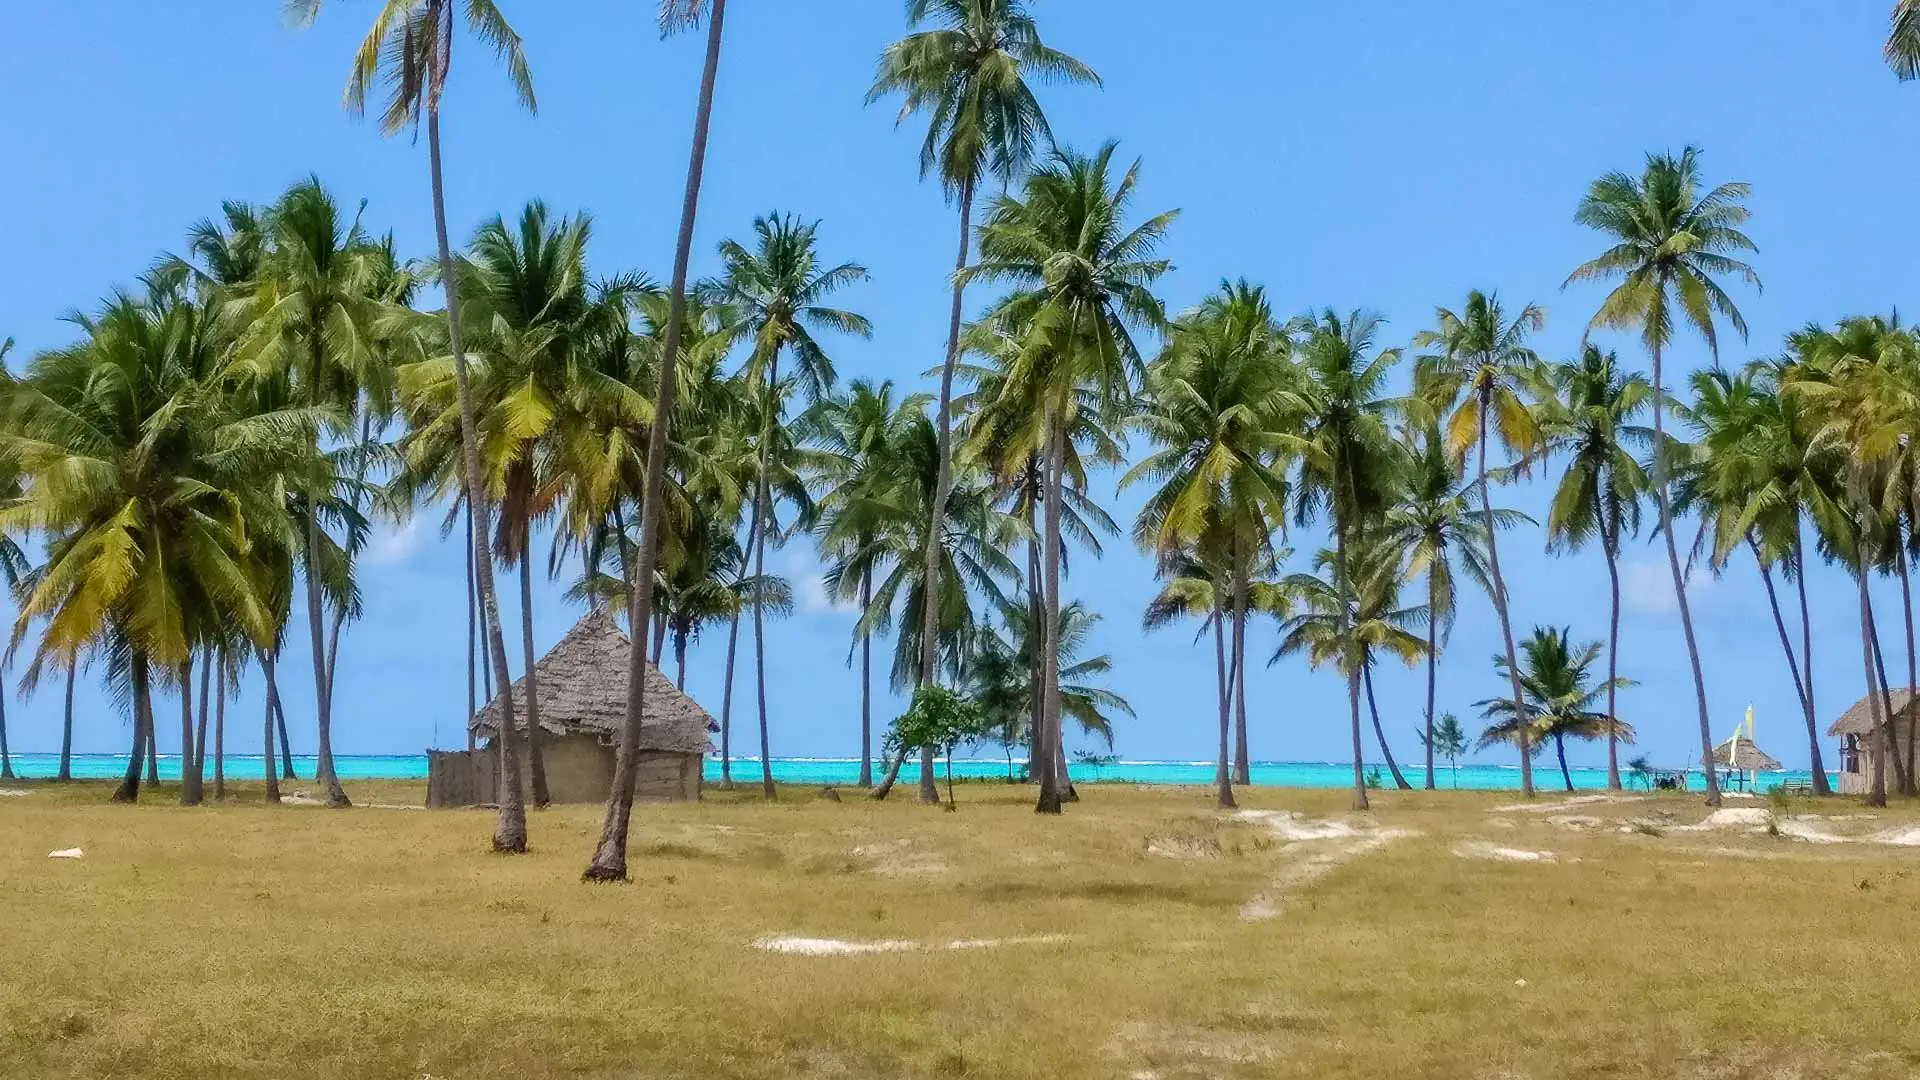 Palmbomen op Zanzibar